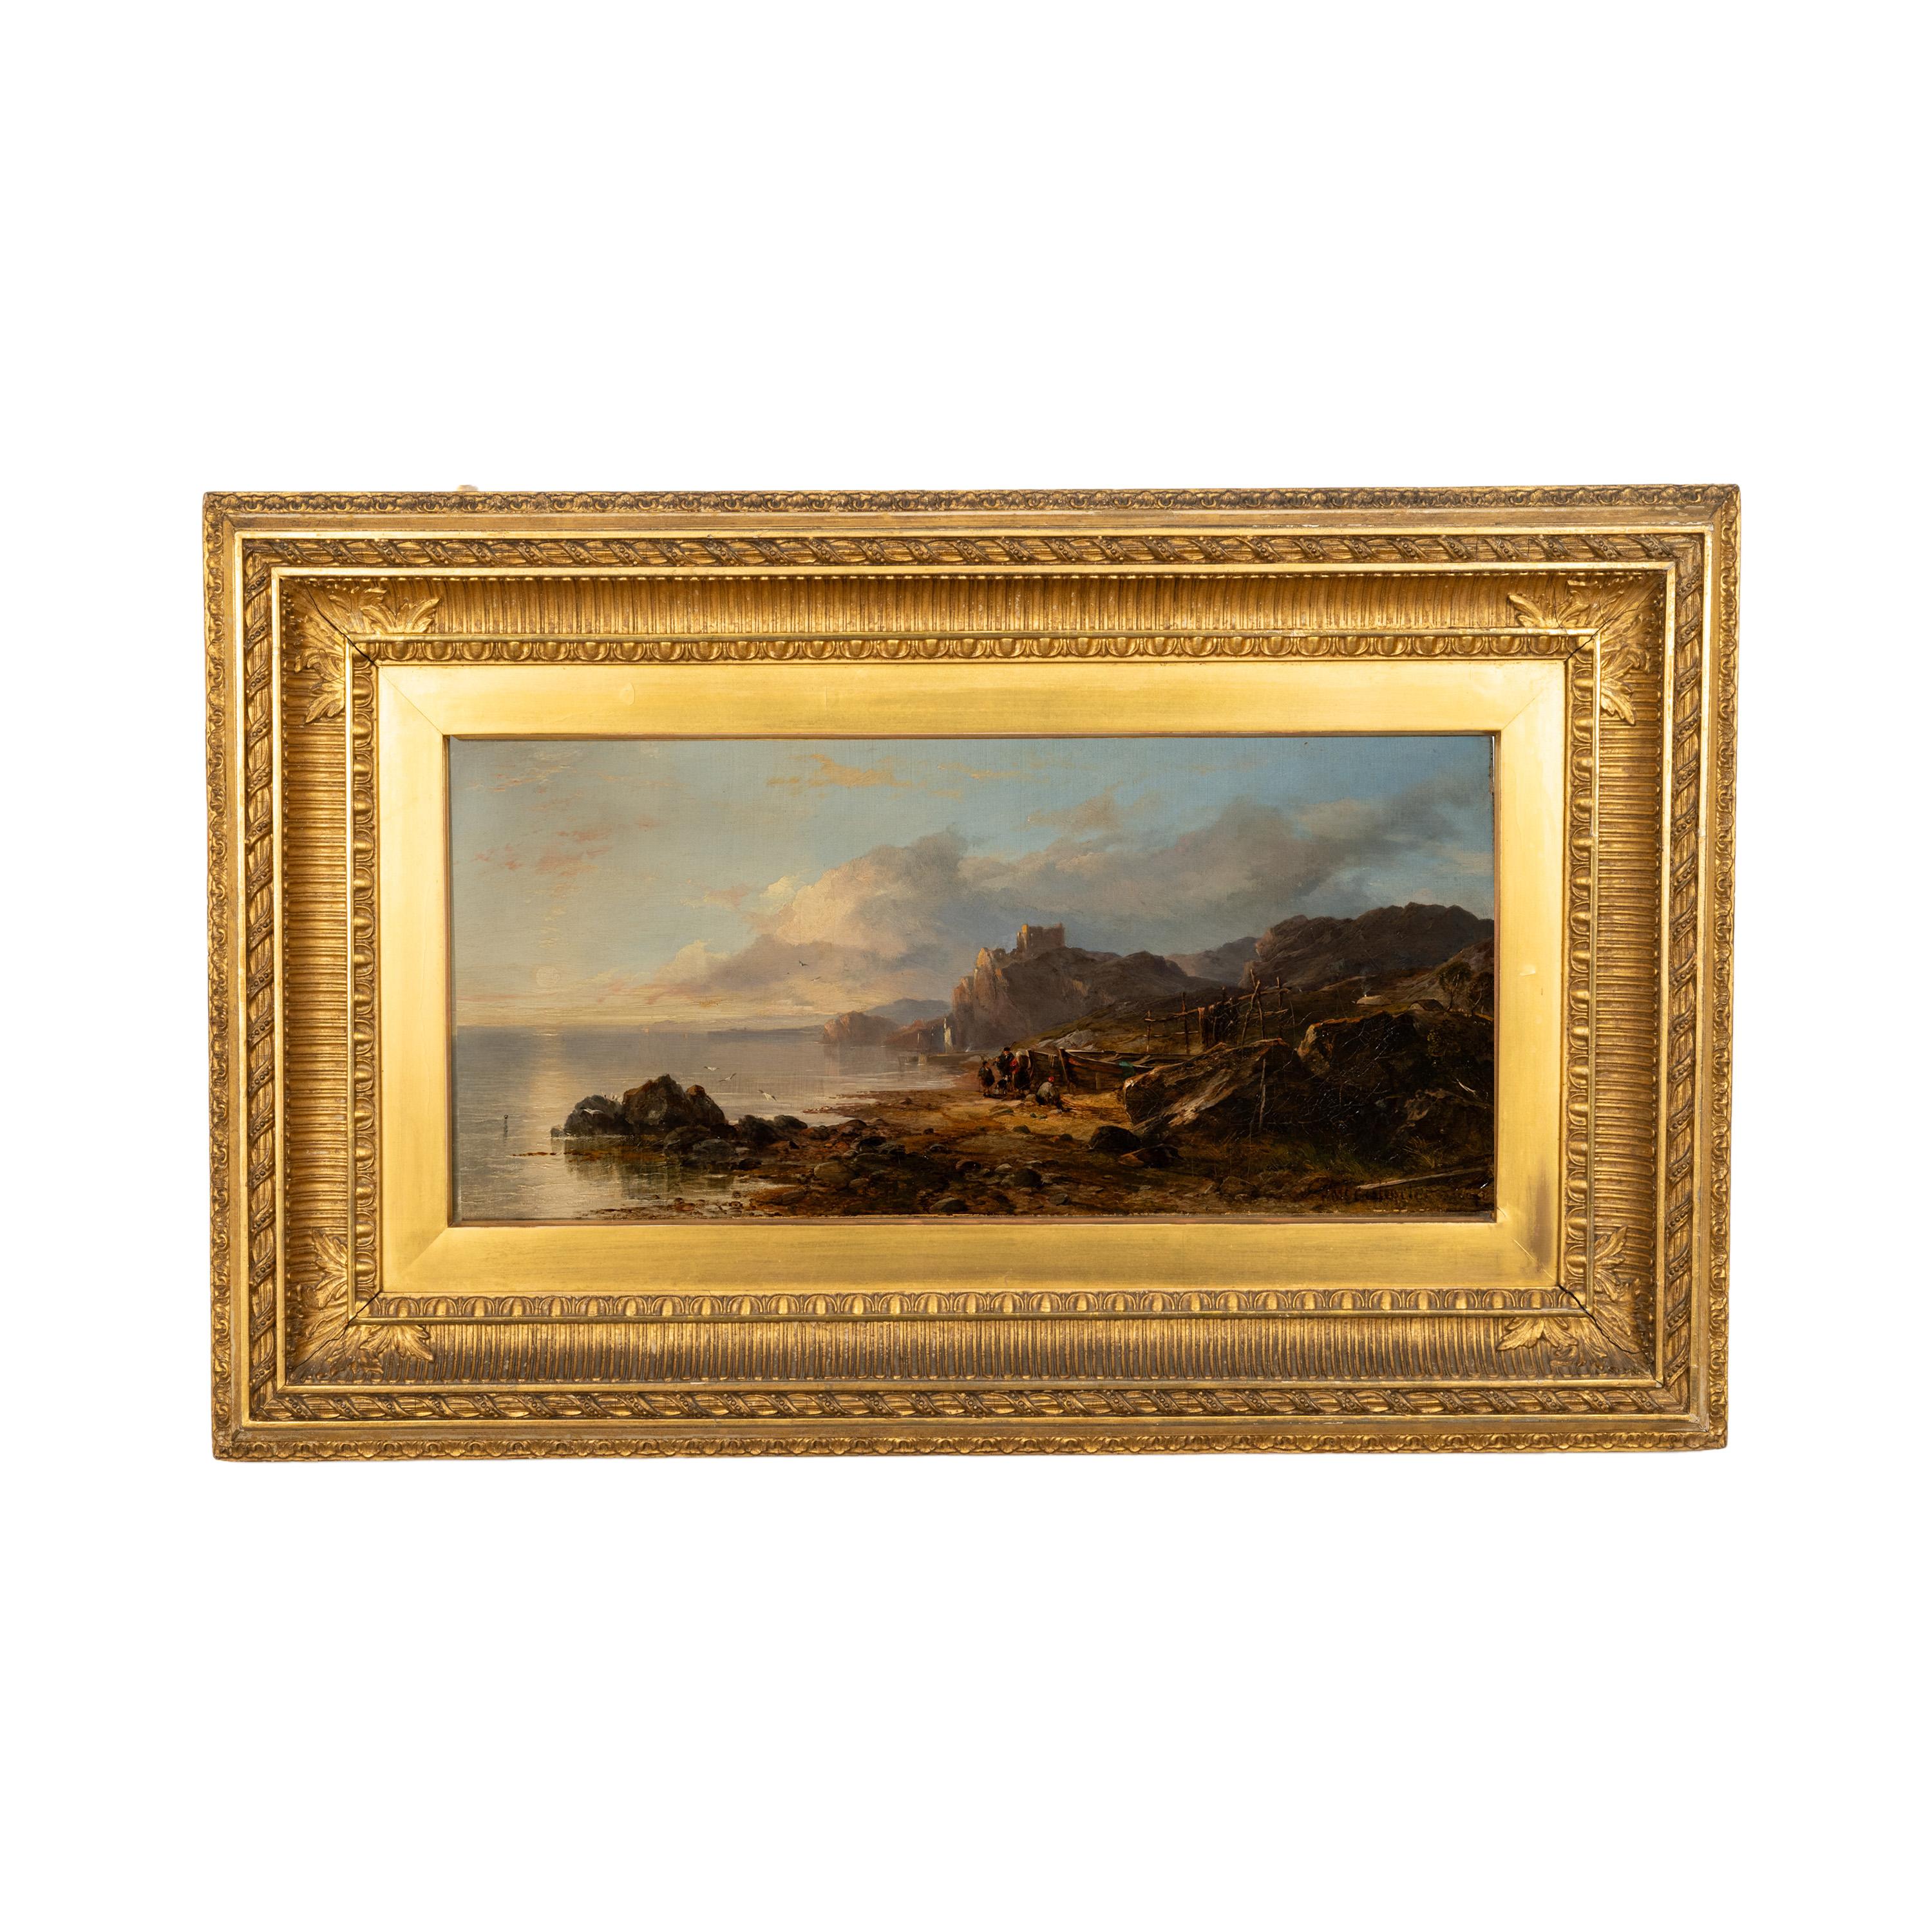 Horatio McCulloch Figurative Painting – Antikes schottisches Ölgemälde auf Leinwand Tantallon Schloss Ruin East Lothian 1850, Öl auf Leinwand 